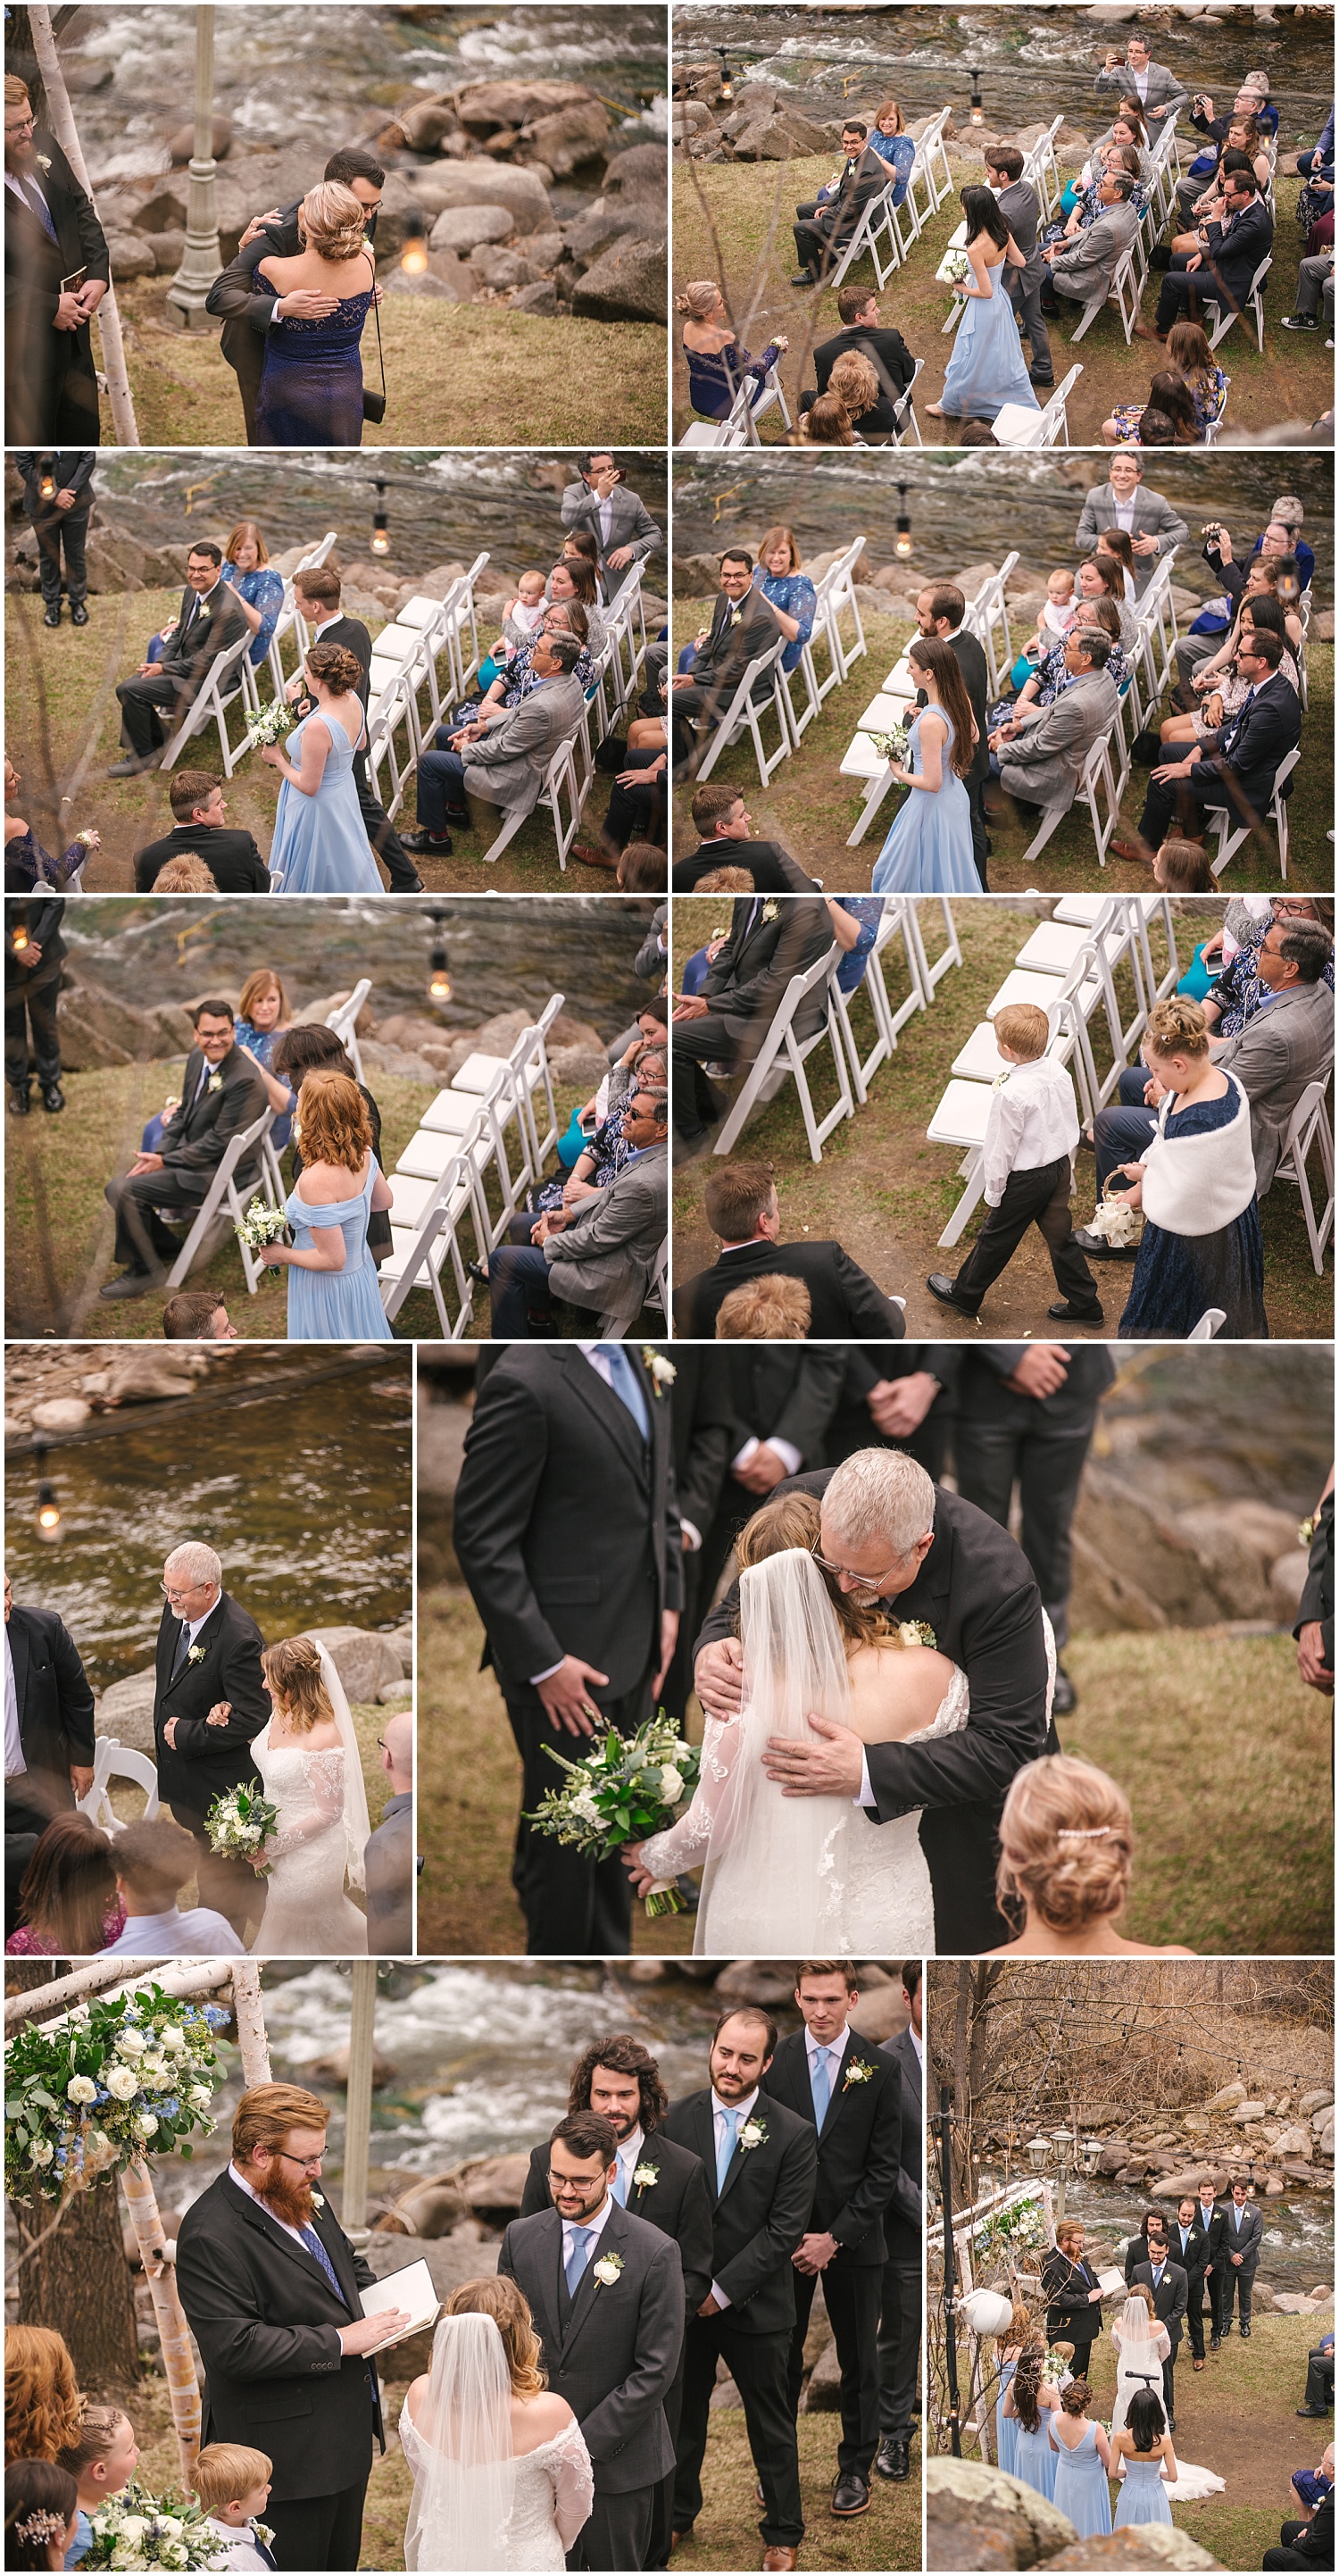 Spring wedding ceremony by the creek at Wedgewood Weddings Boulder Creek wedding venue